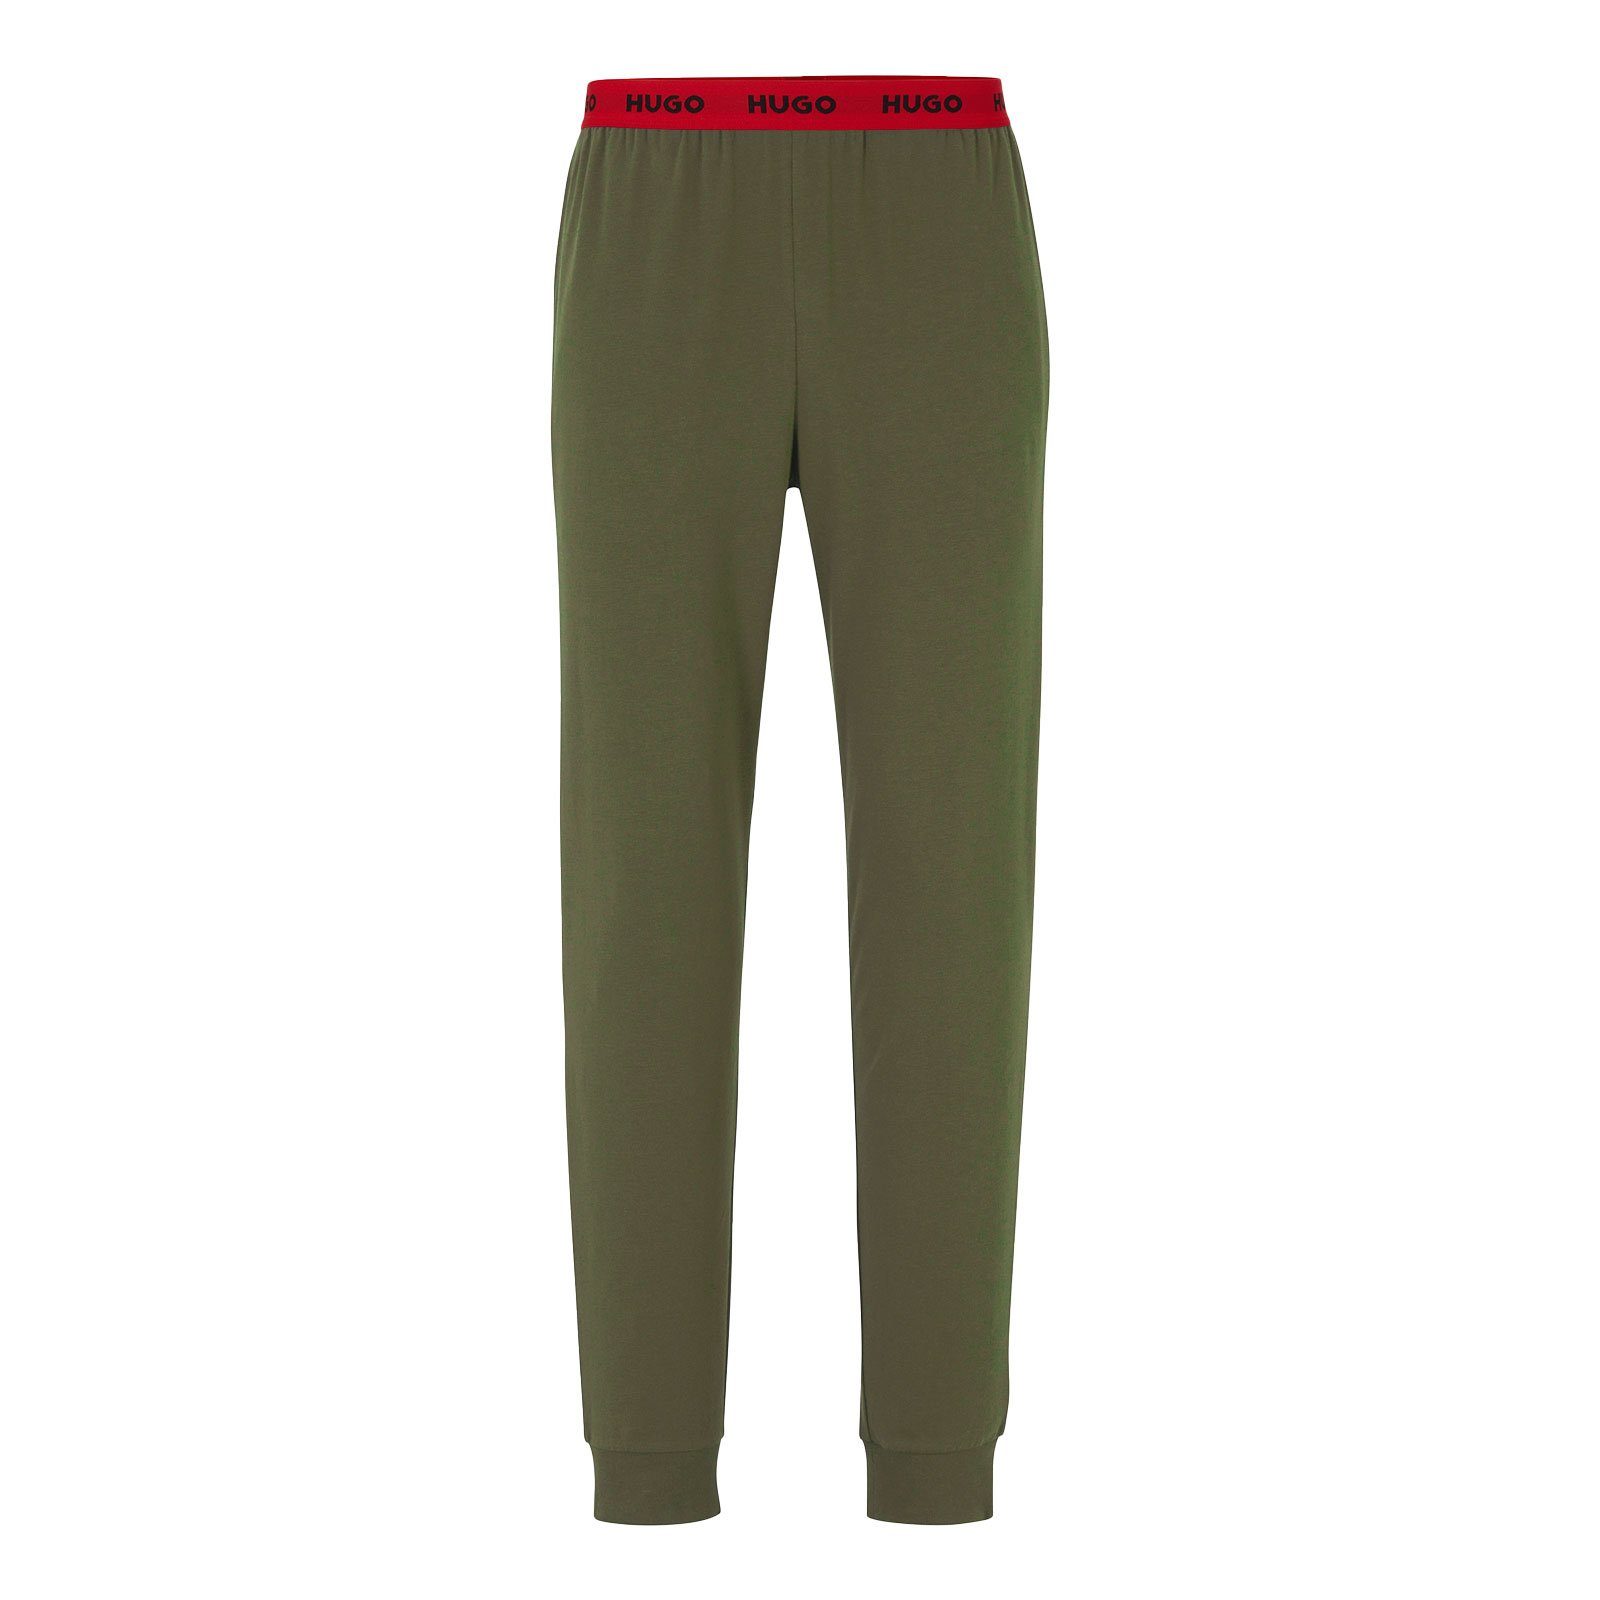 HUGO Pyjamahose Linked Pants mit sichtbarem Elastikbund 345 open green | Pyjamahosen